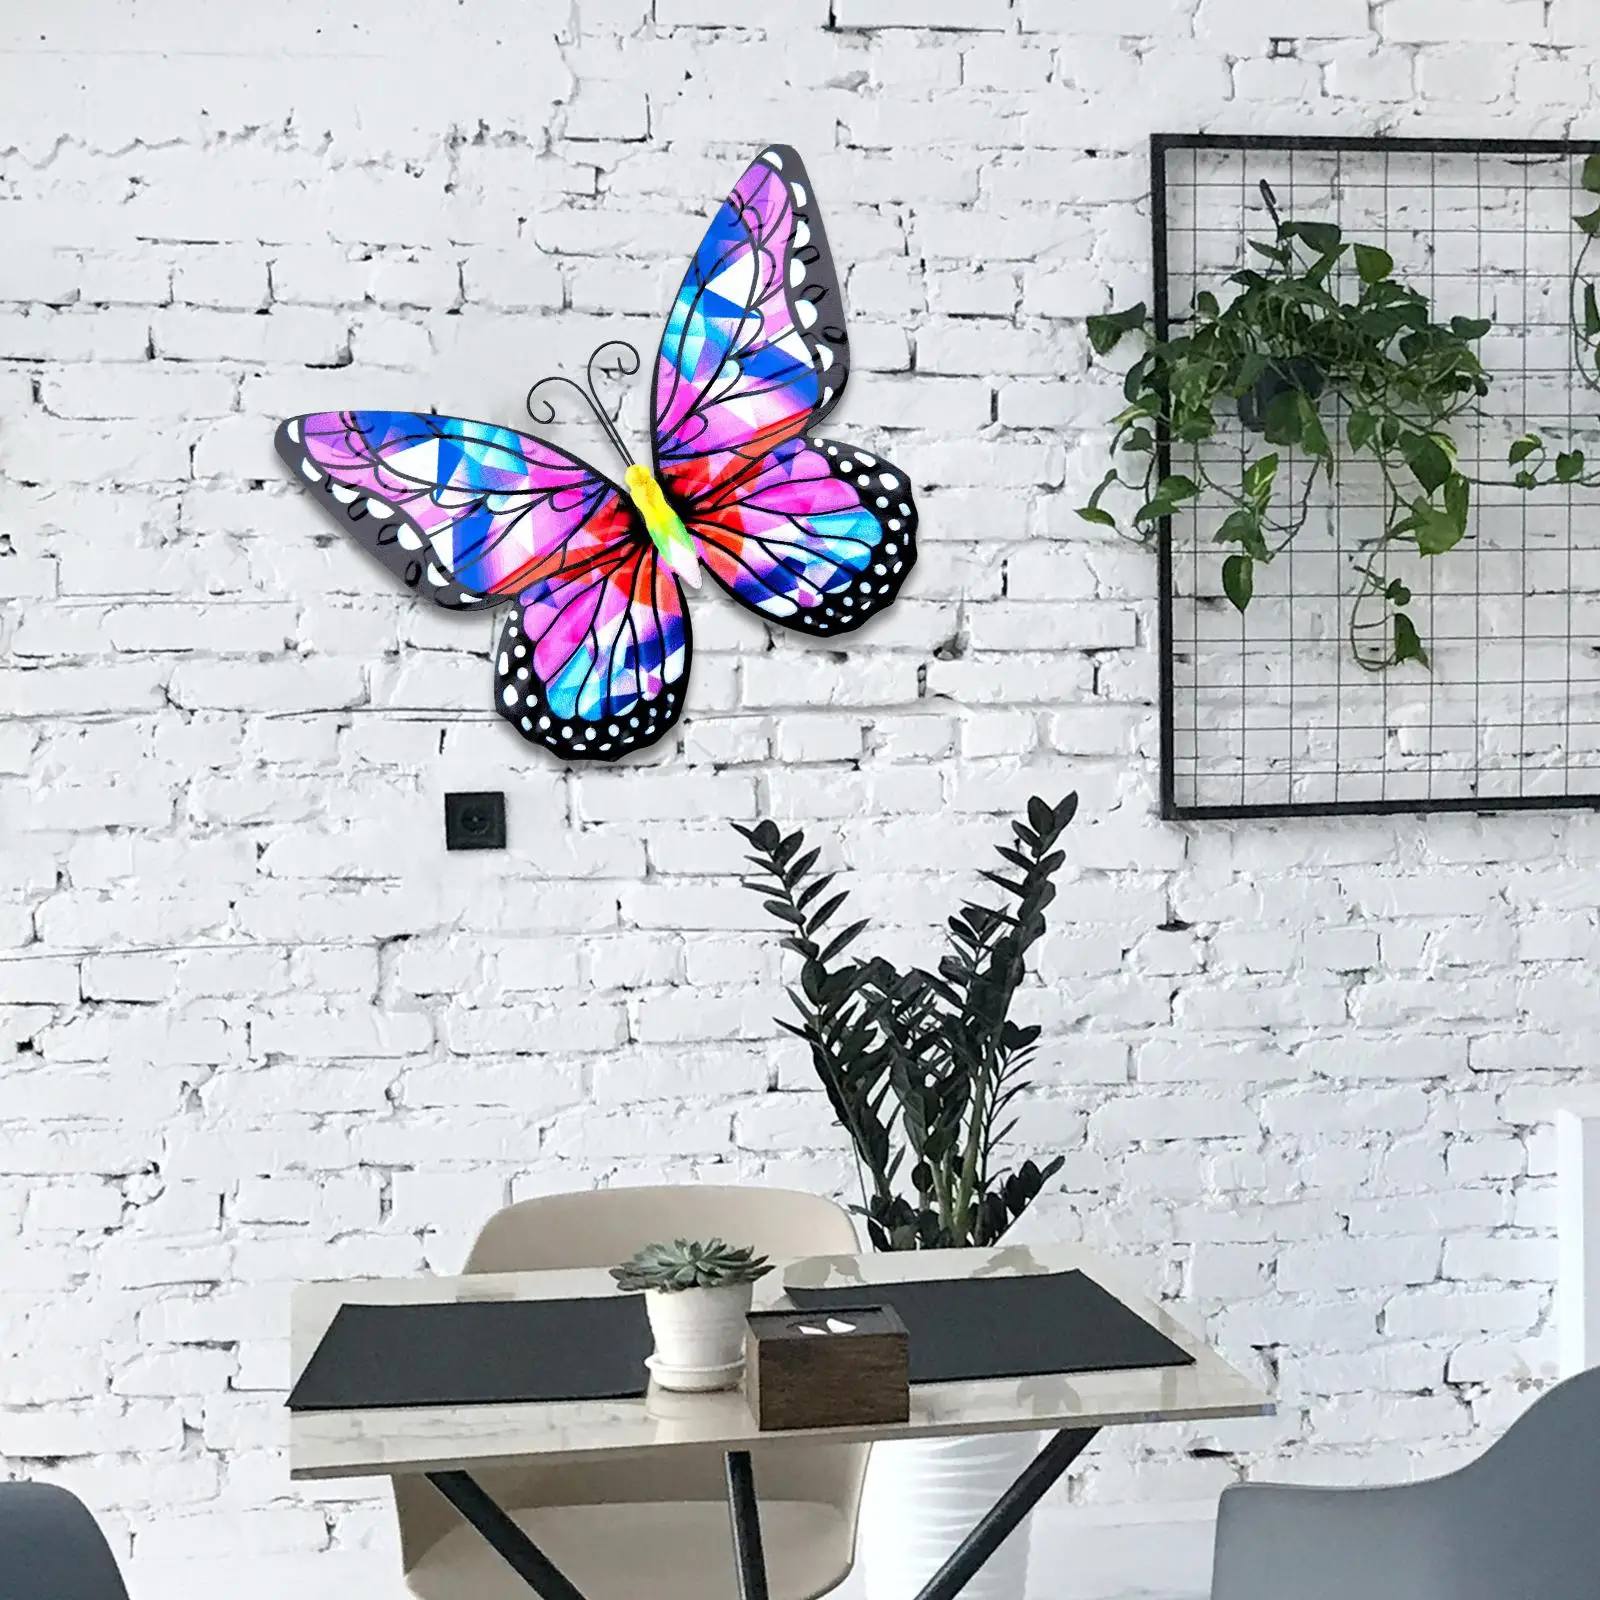 metal butterflies Wall Decor Beautiful Decorative 9.84`` wing metal butterflies Sculptures for Deck Yard Porch Patio Outdoor